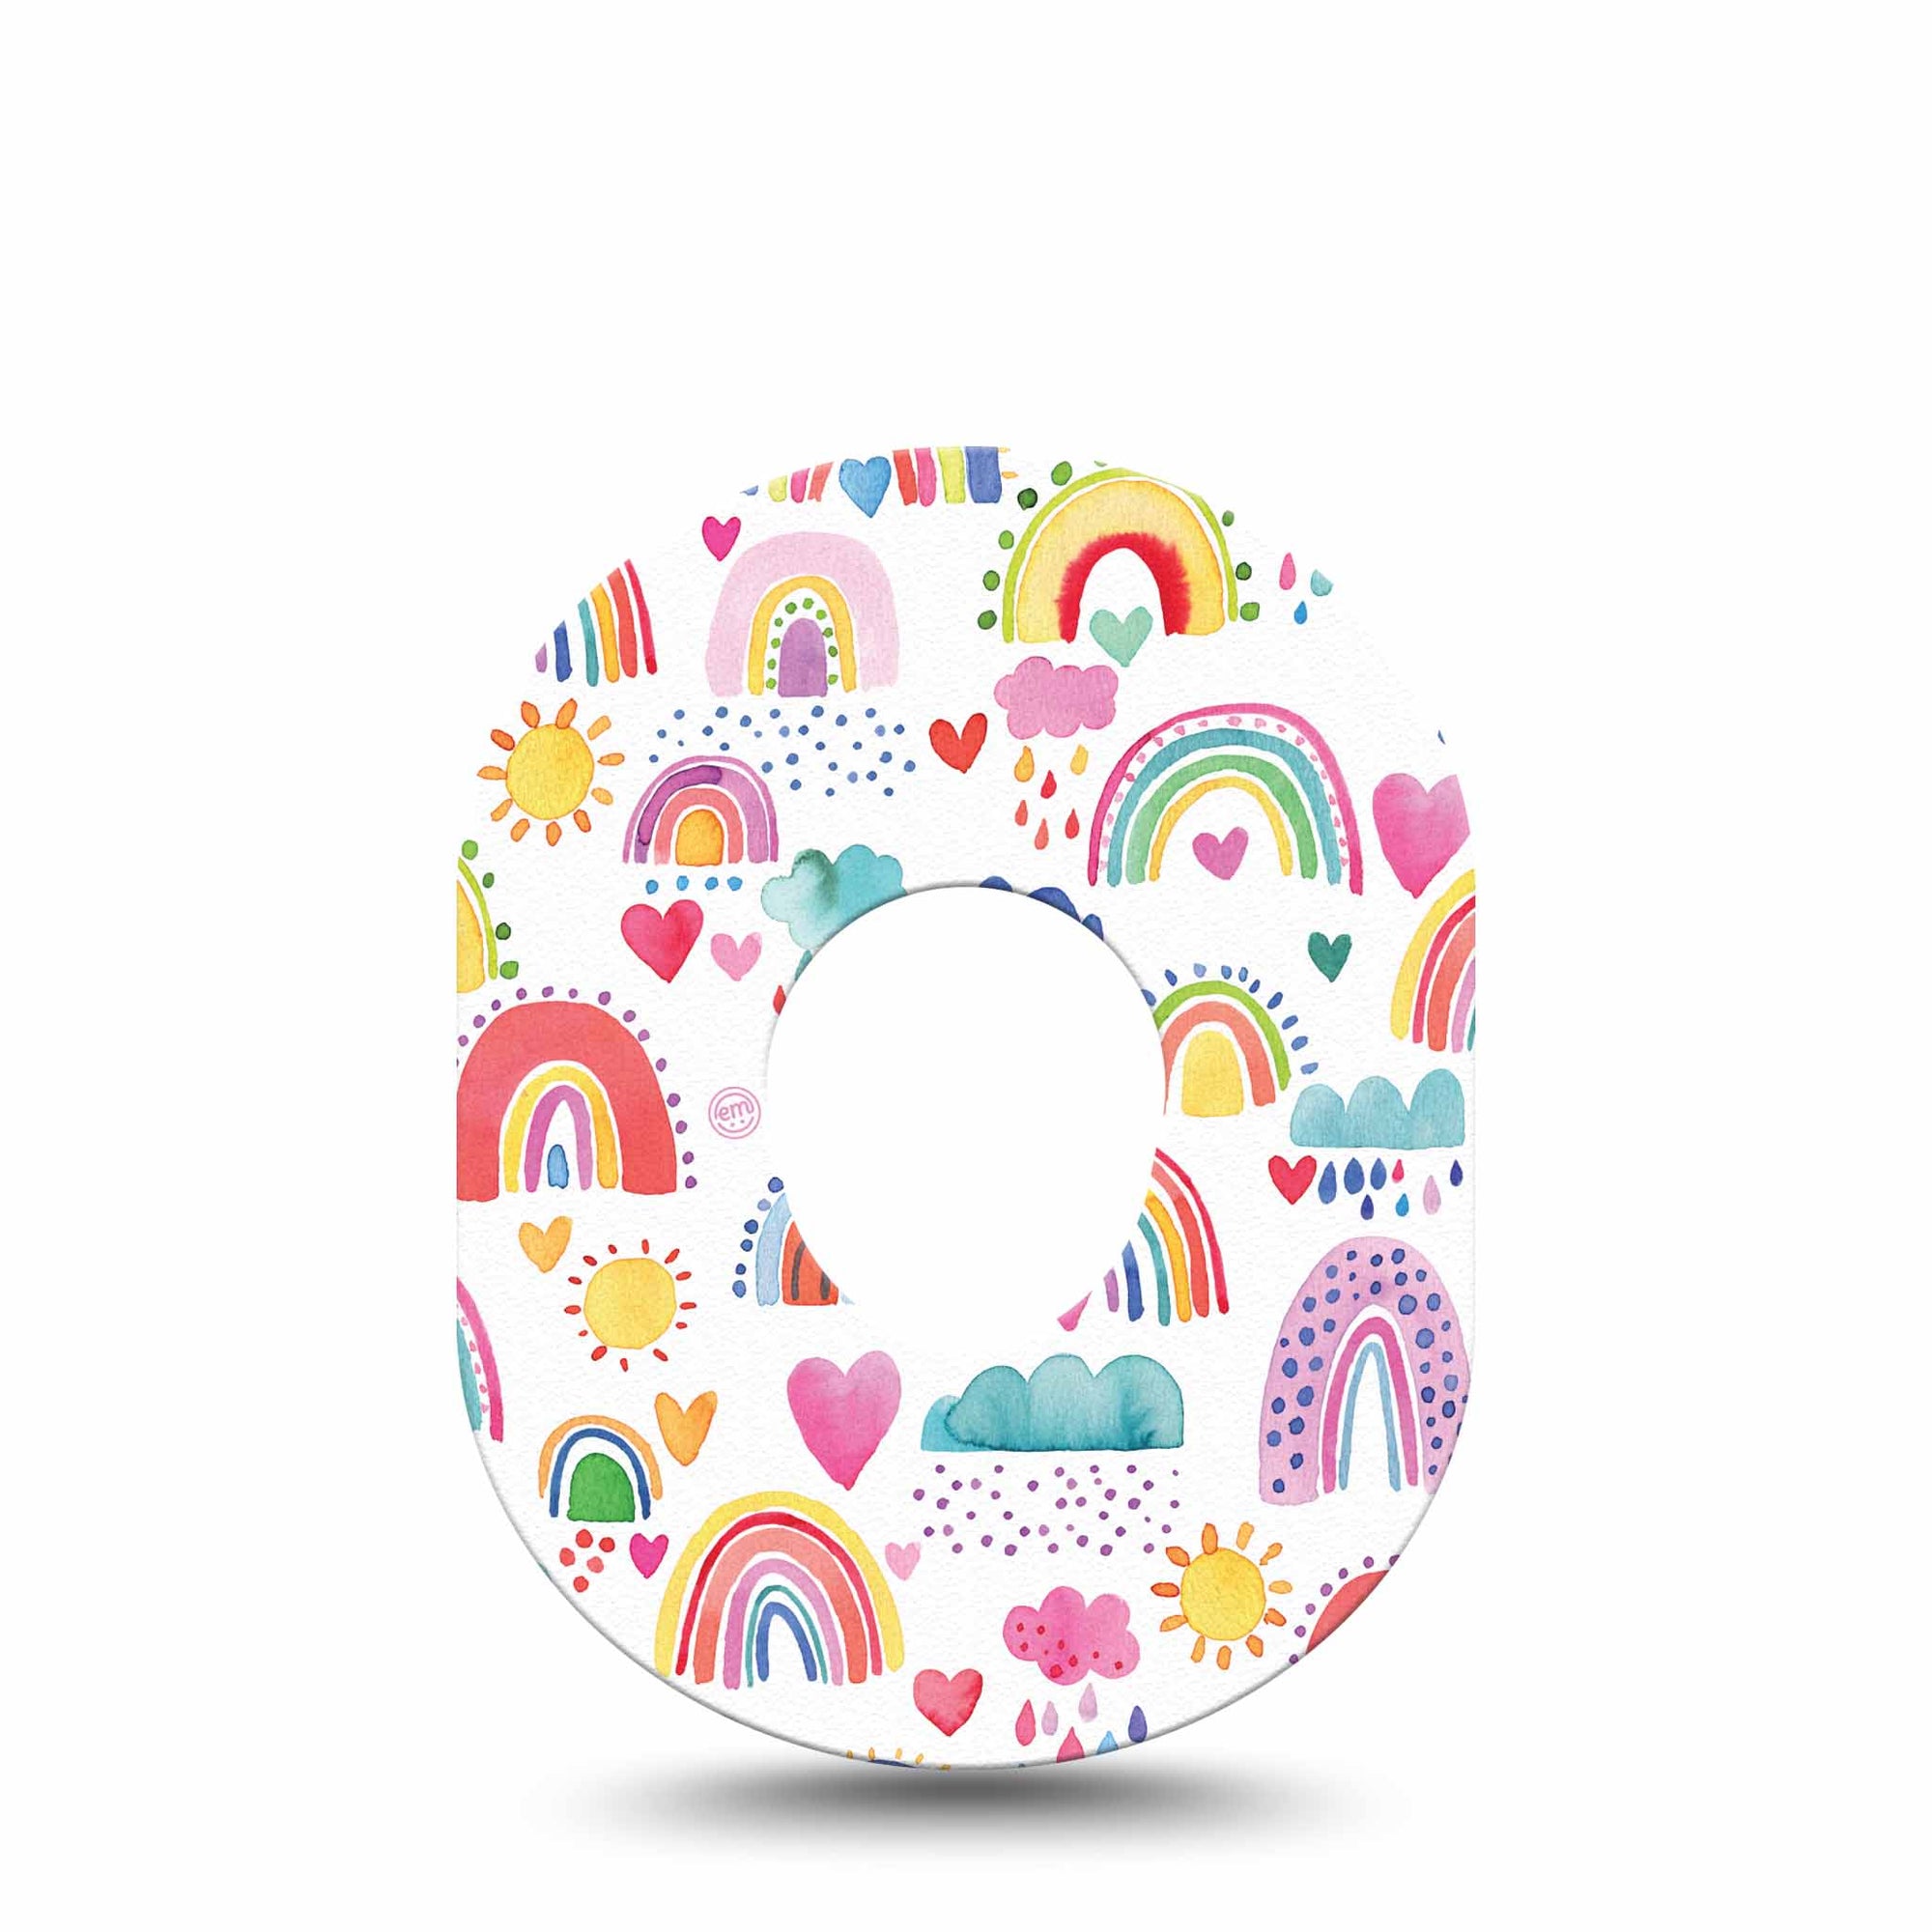 ExpressionMed Rainbows Of Hope Dexcom G7 Tape, Single, Rainbow Doodles Themed, CGM Patch Design, Dexcom Stelo Glucose Biosensor System